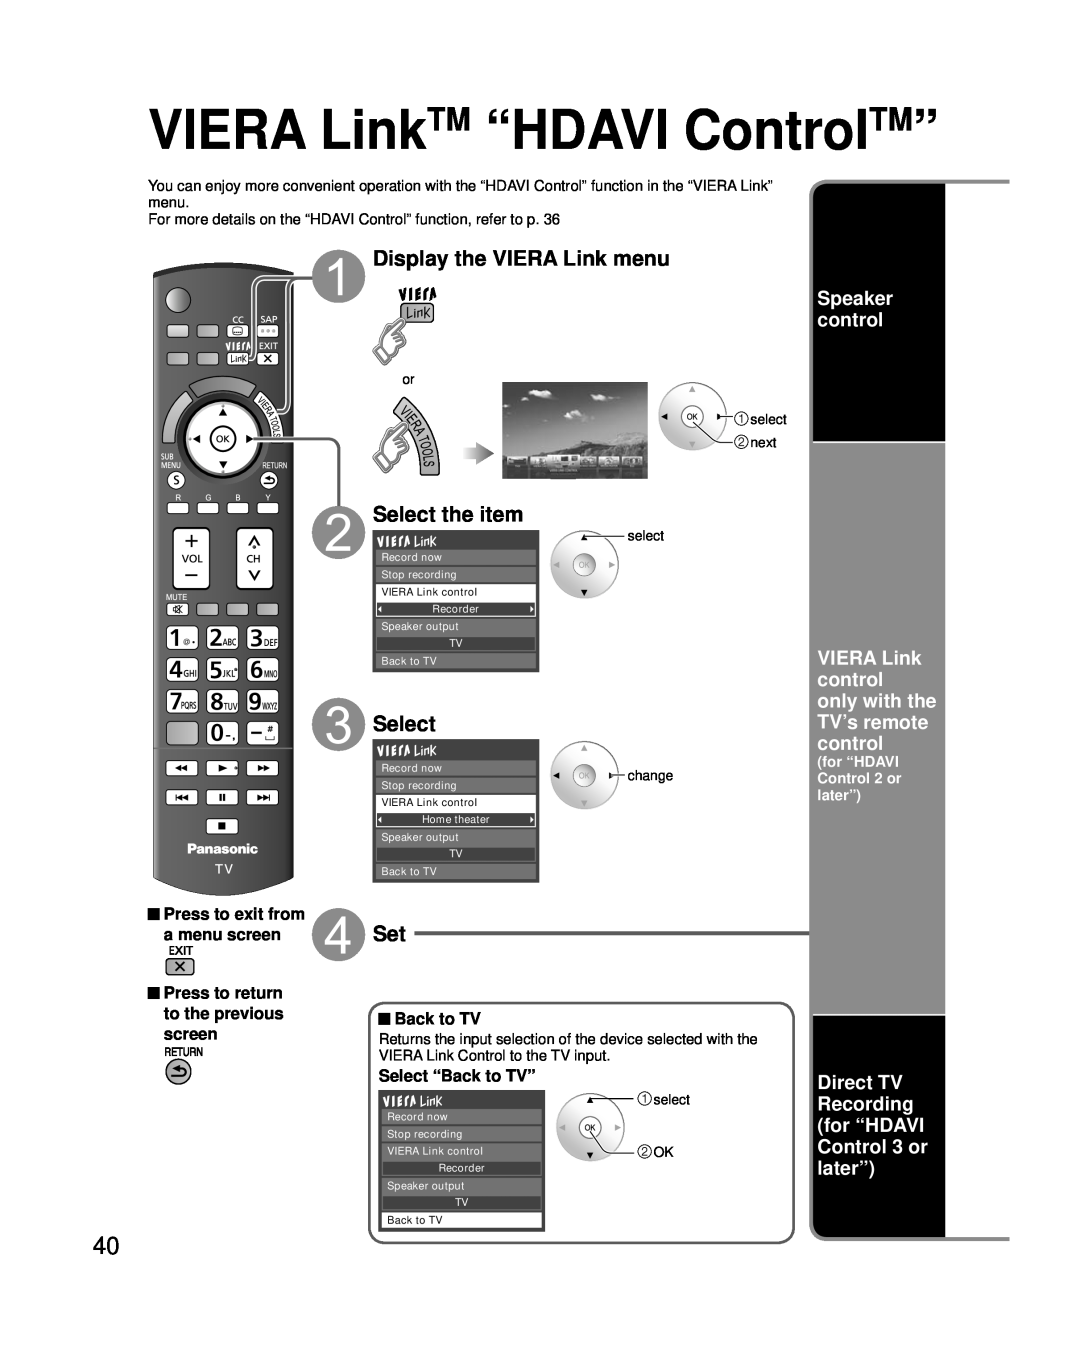 Panasonic TC-P42G25 VIERA LinkTM “HDAVI ControlTM”, Speaker control, VIERA Link control only with the TV’s remote control 